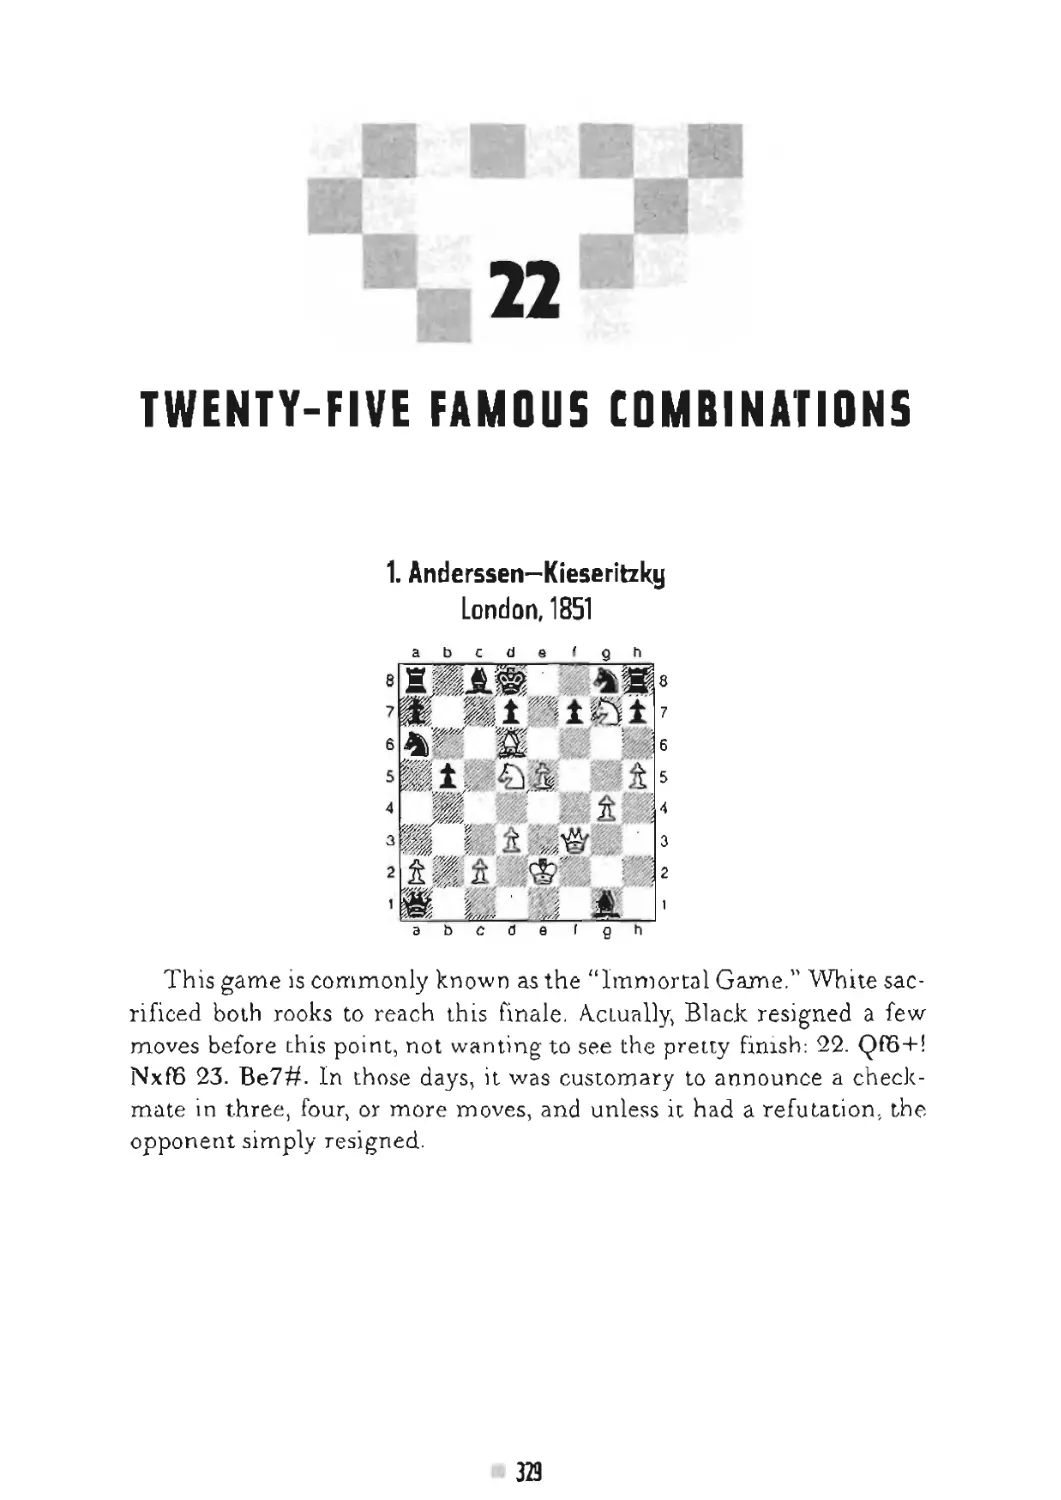 22 Twenty-five famous combinations